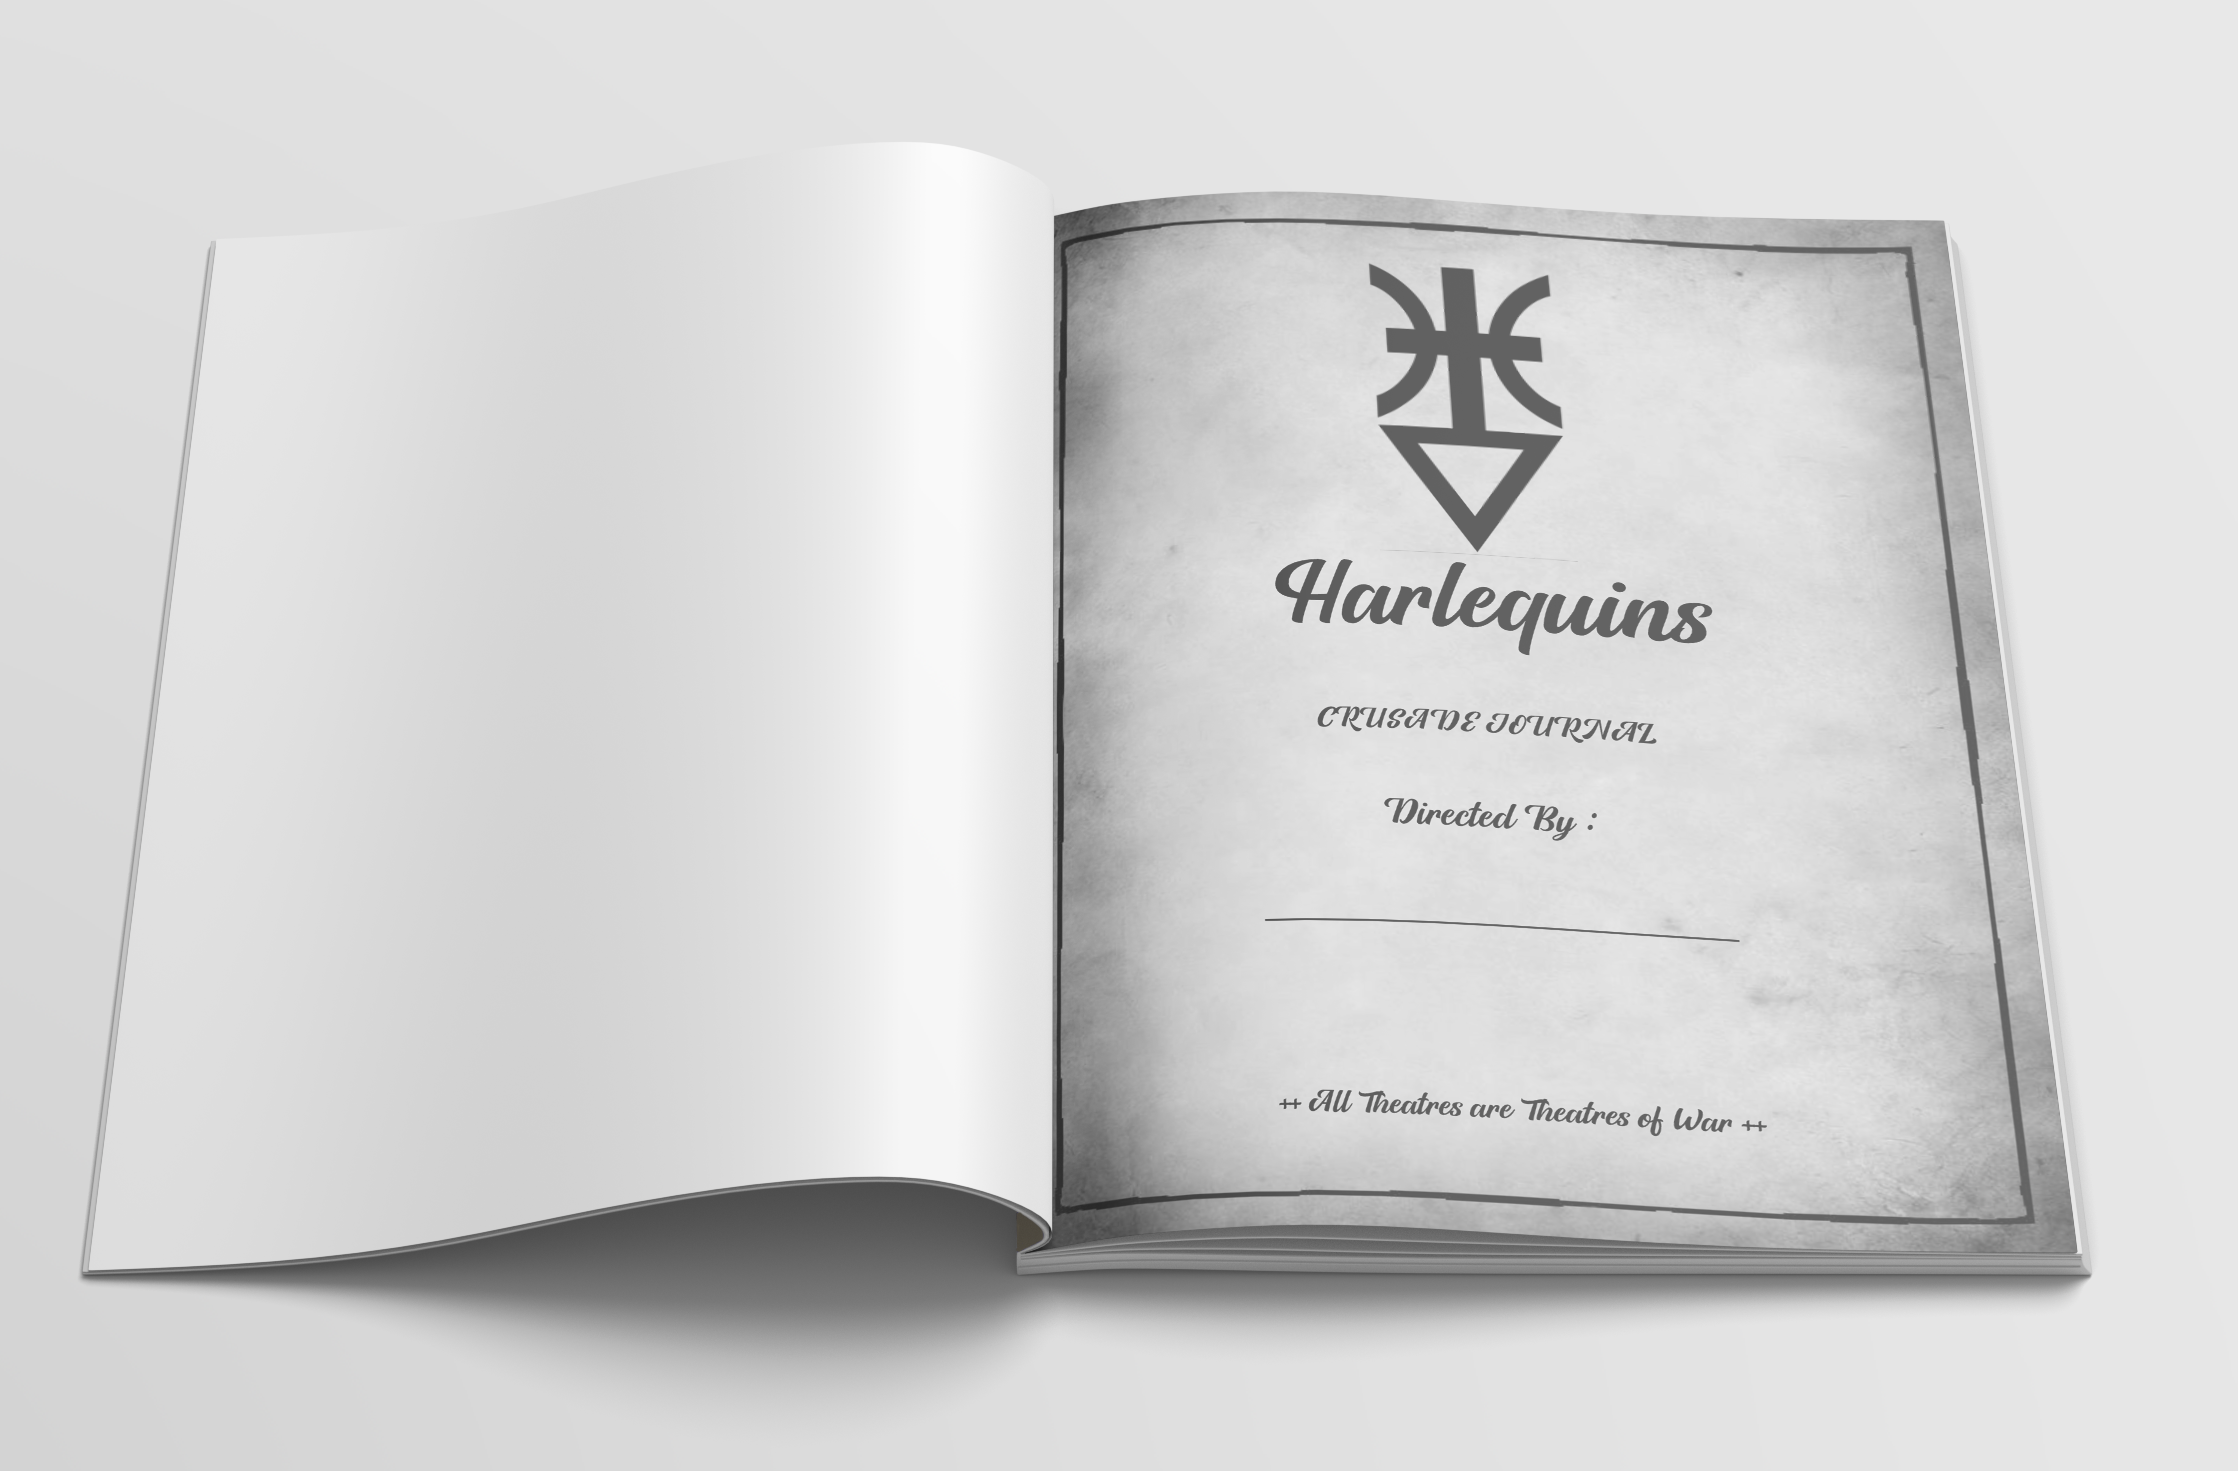 Harlequins | Crusade Journal | WH 40K